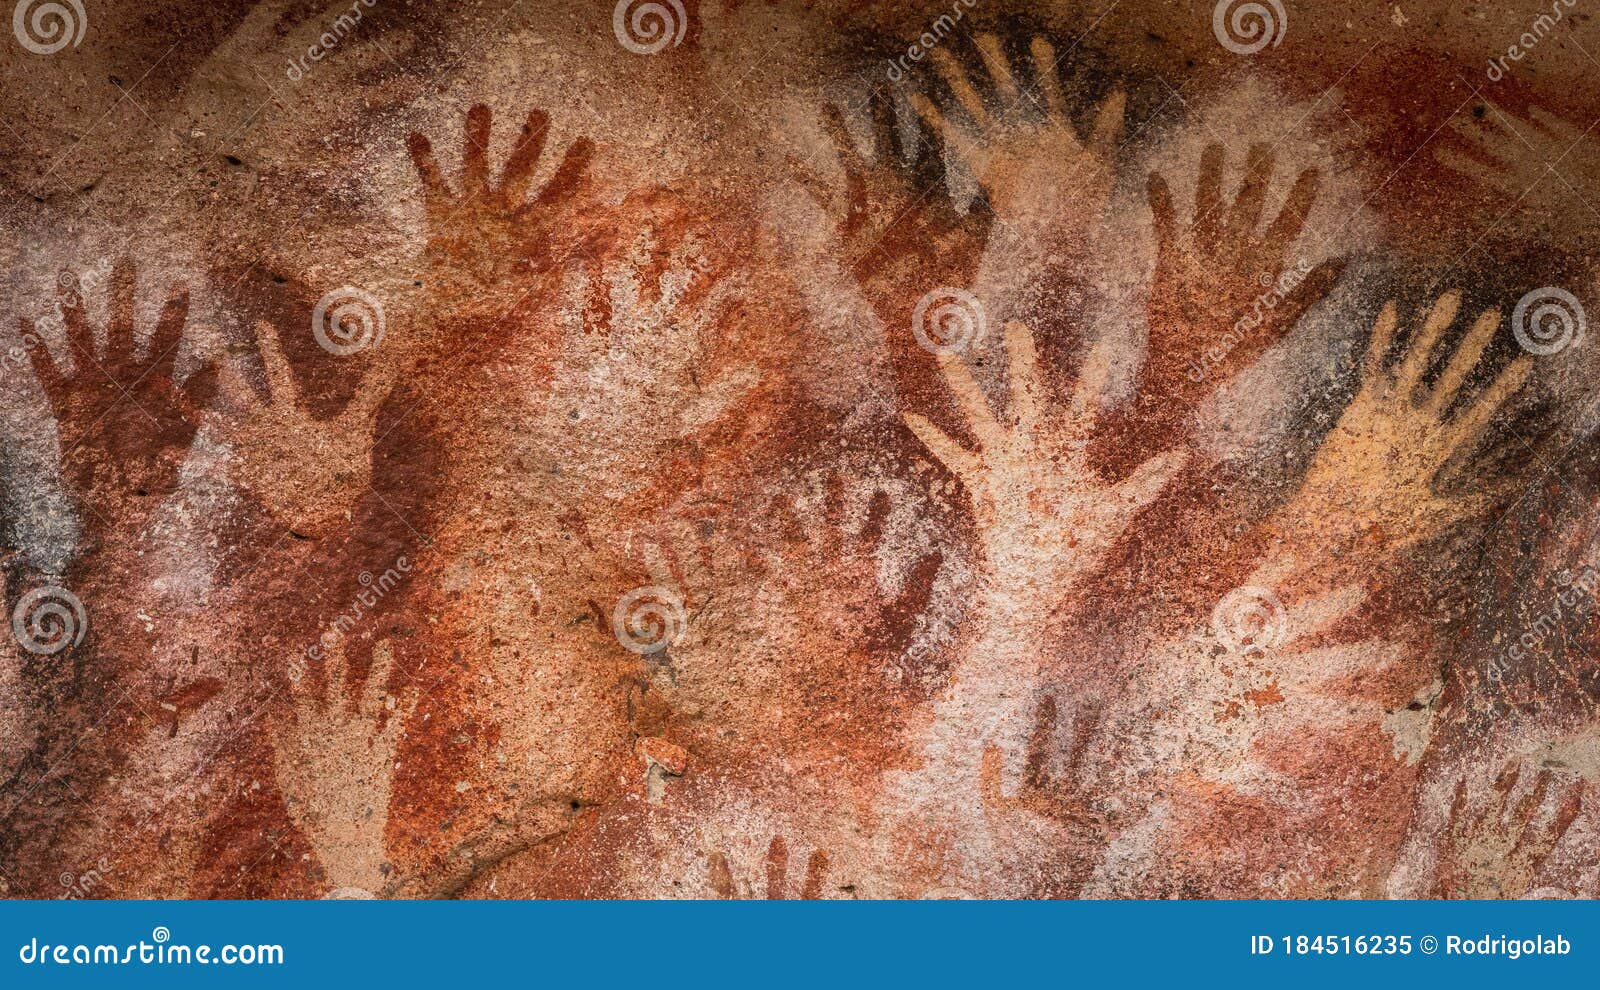 ancient hand paintings at cueva de las manos in santa cruz province, patagonia, argentina